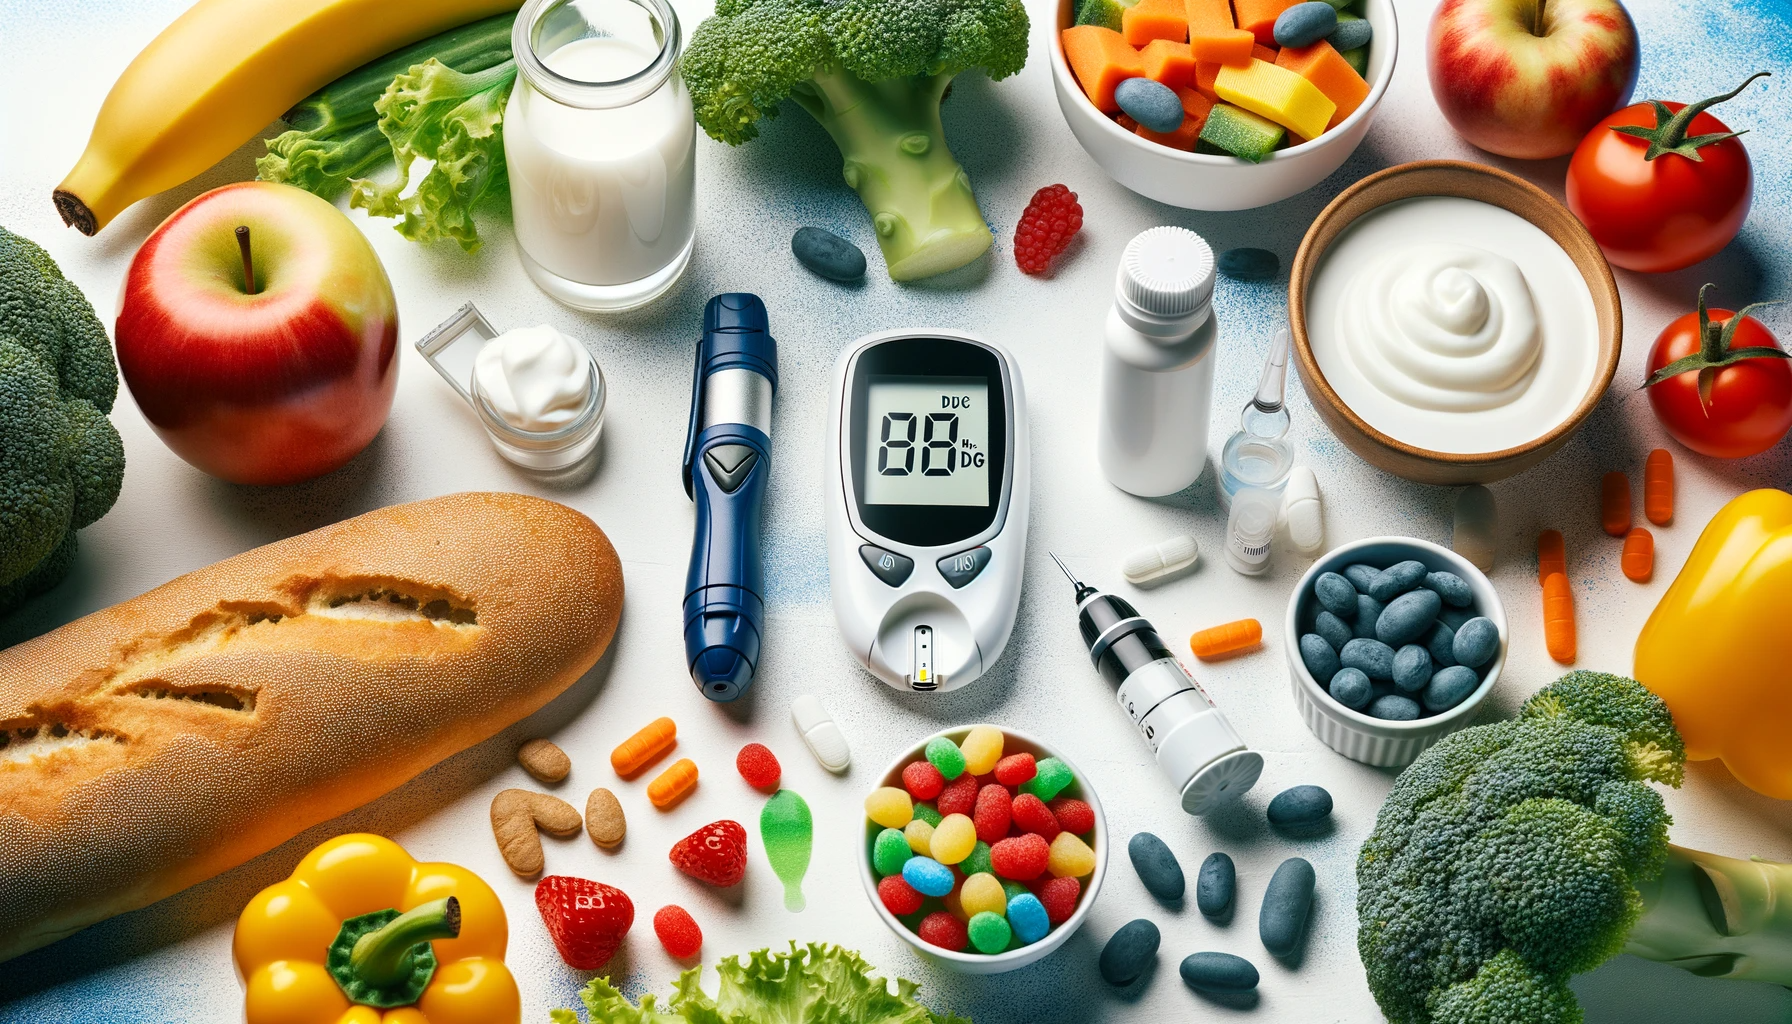 What is Type 2 Diabetes?